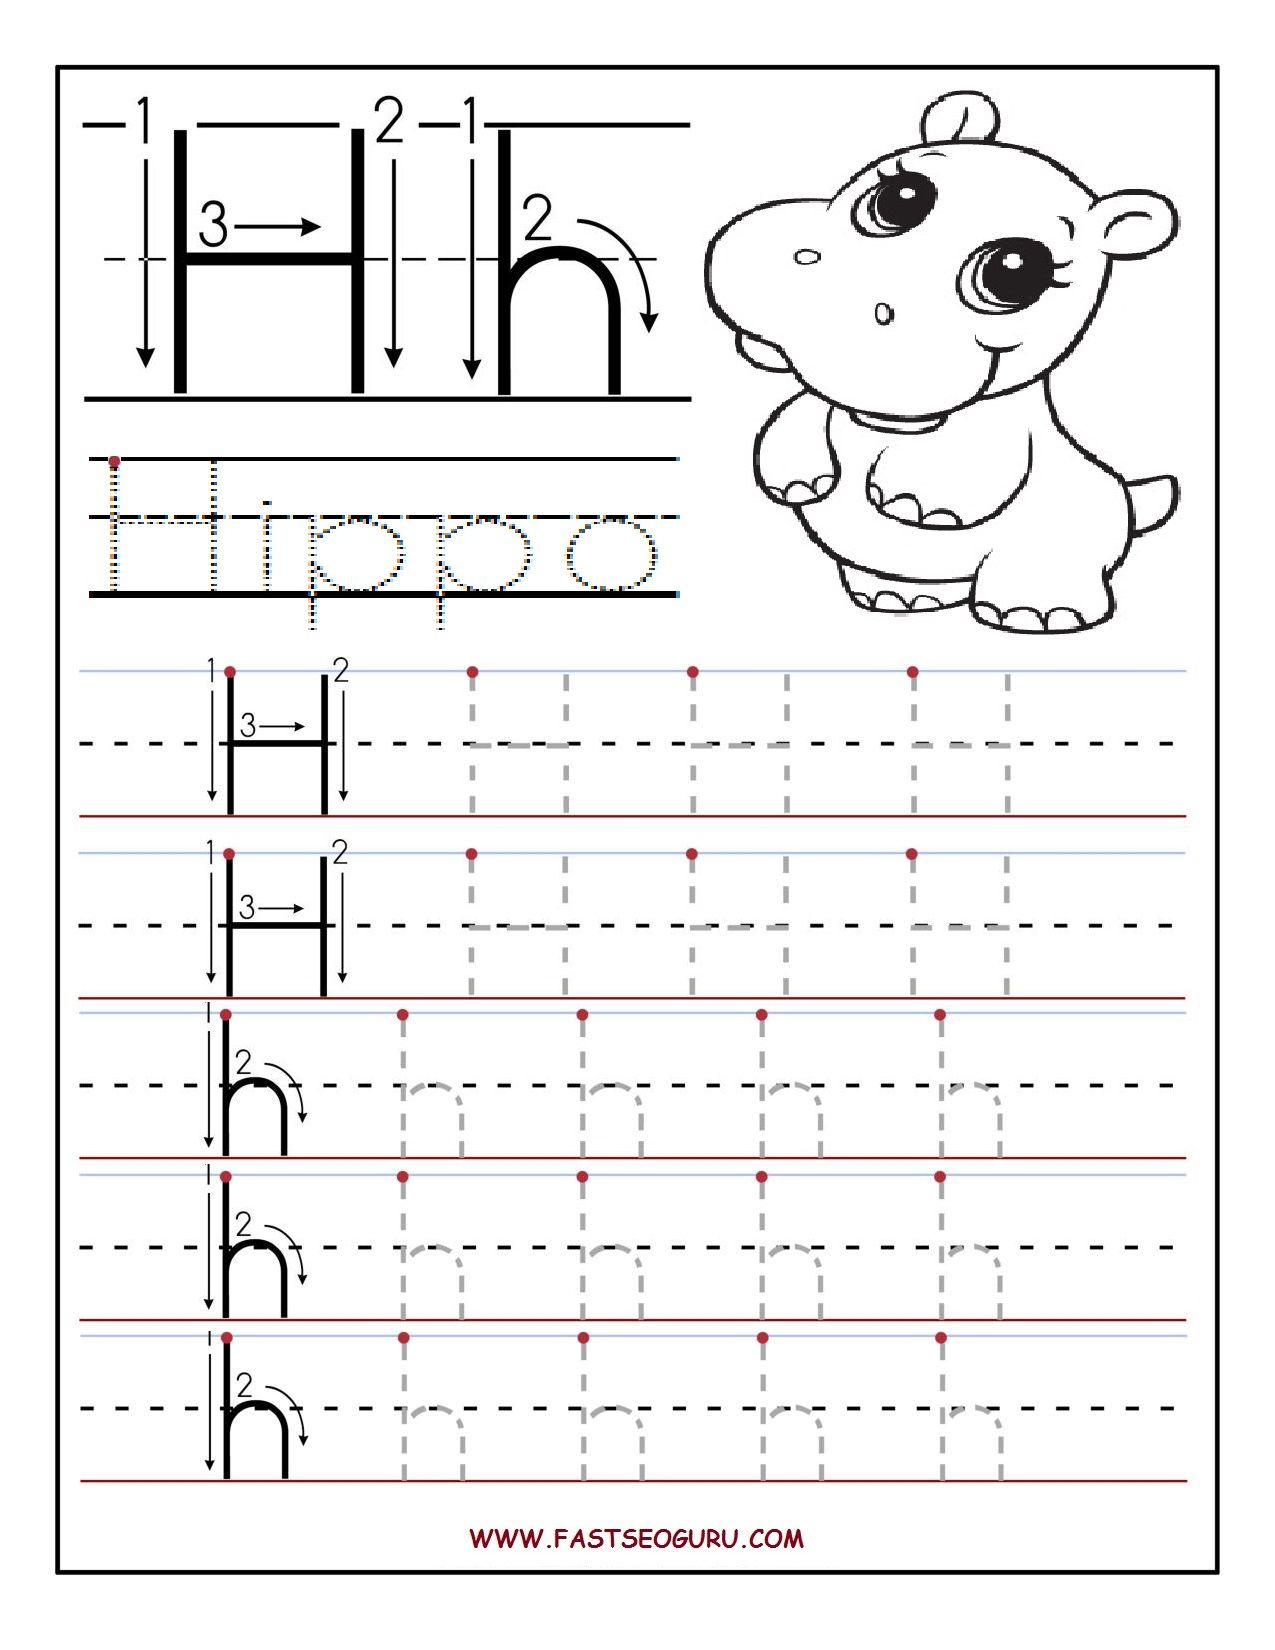 Printable Letter H Tracing Worksheets For Preschool intended for Free Tracing Letter H Worksheets